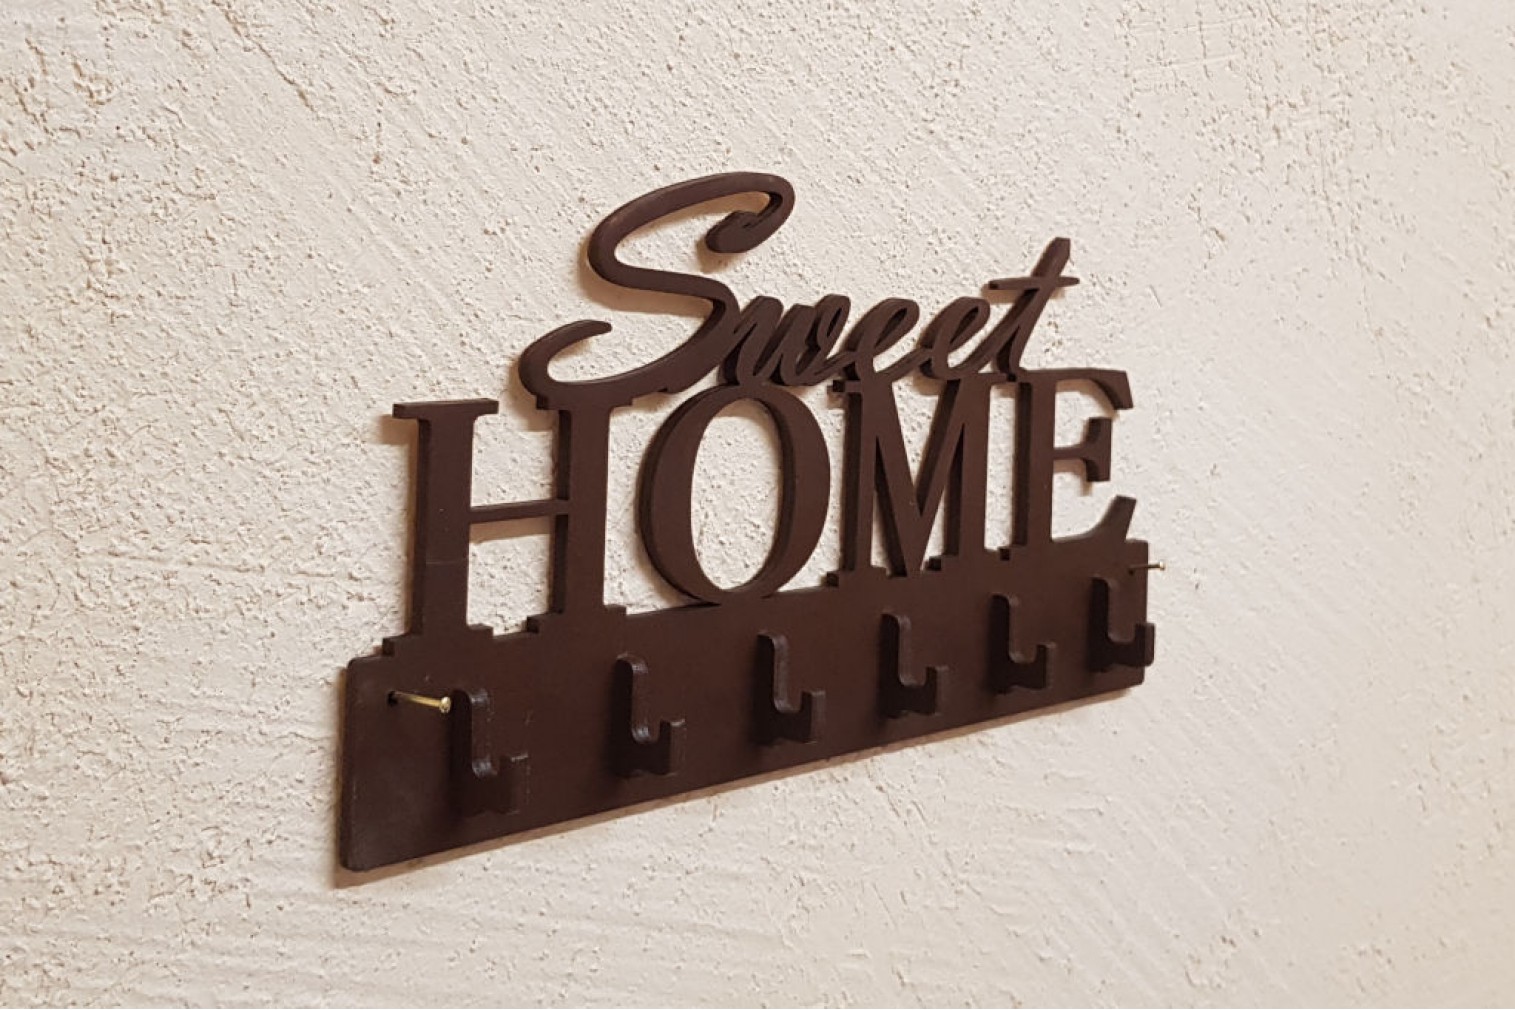 Key hanger "Sweet Home" 